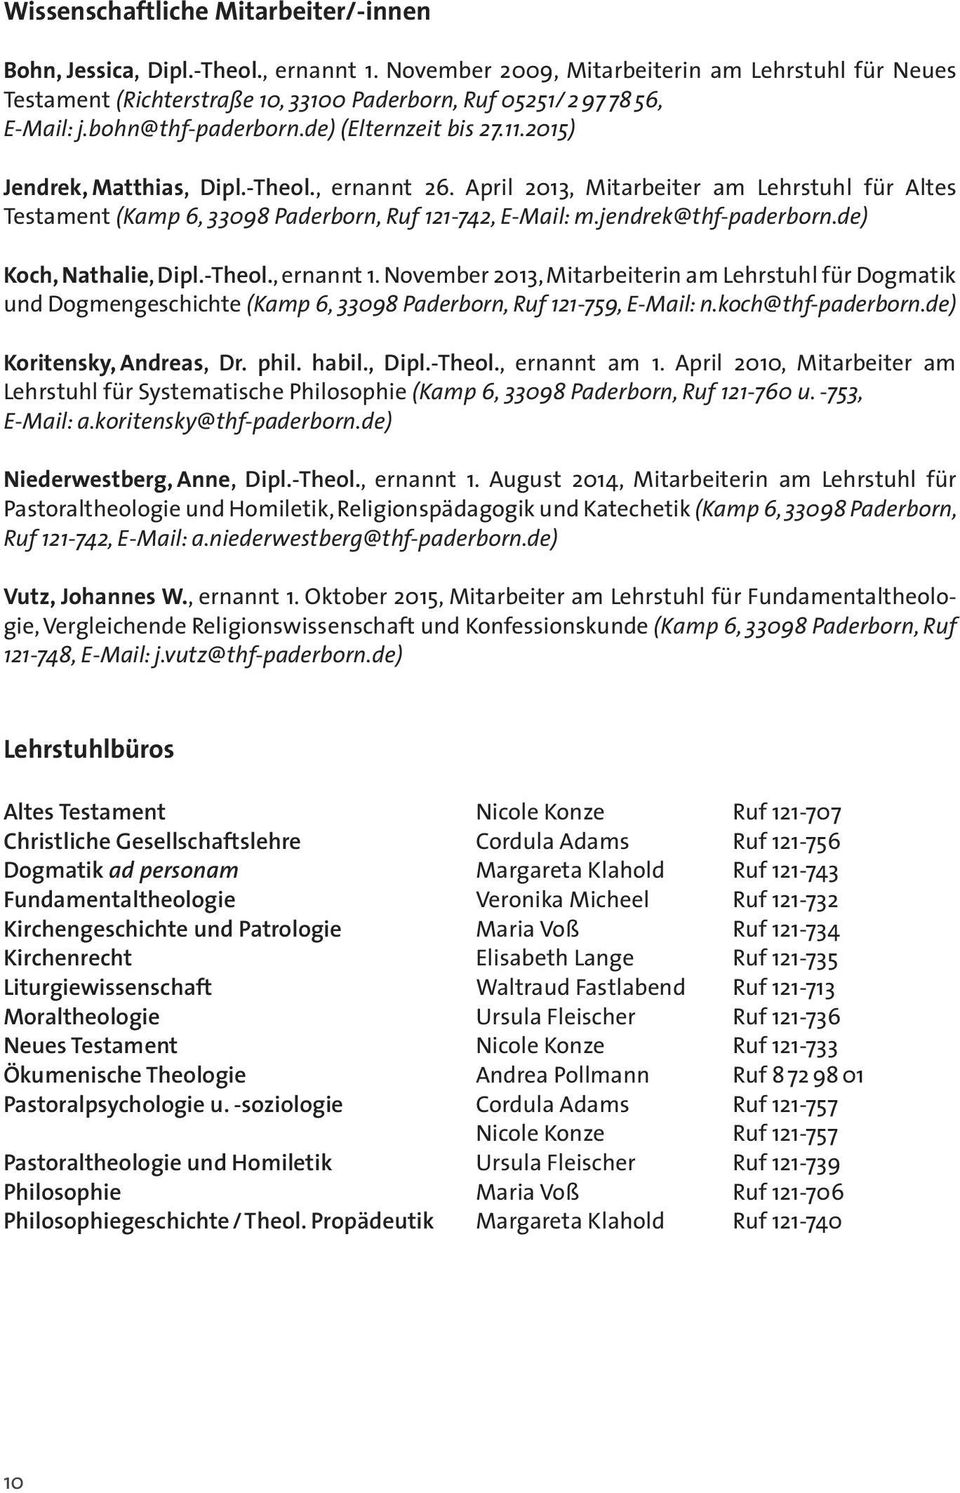 2015) Jendrek, Matthias, Dipl.-Theol., ernannt 26. April 2013, Mitarbeiter am Lehrstuhl für Altes Testament (Kamp 6, 33098 Paderborn, Ruf 121-742, E-Mail: m.jendrek@thf-paderborn.